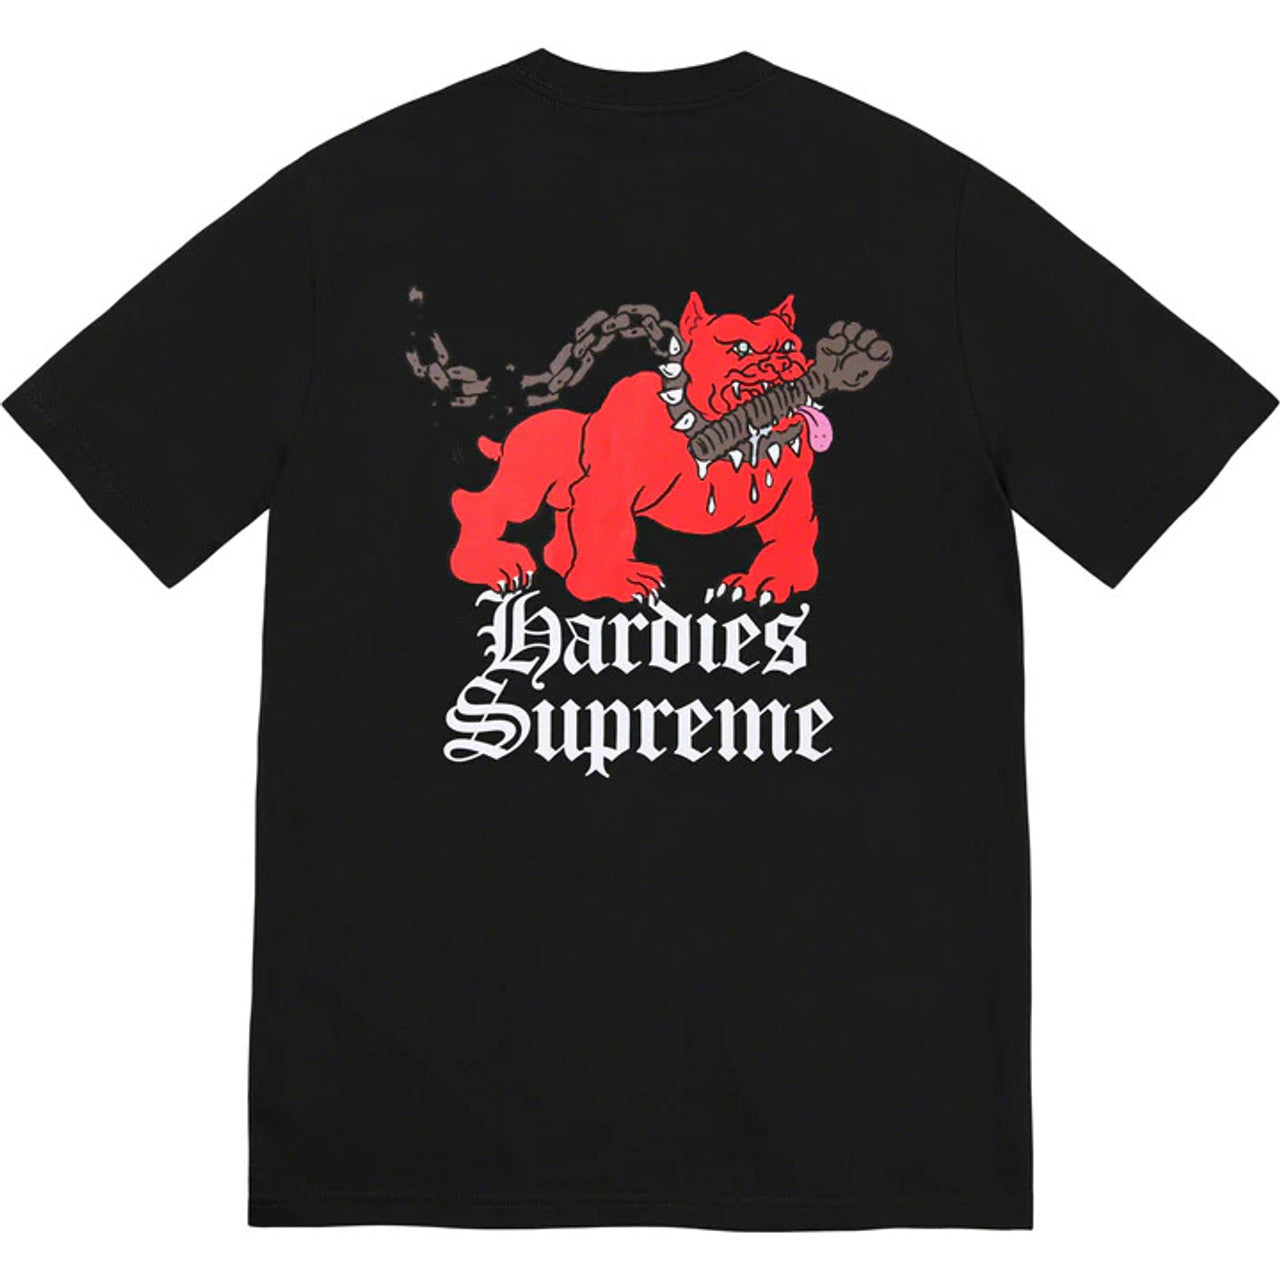 Supreme / Hardies Dog Tee \